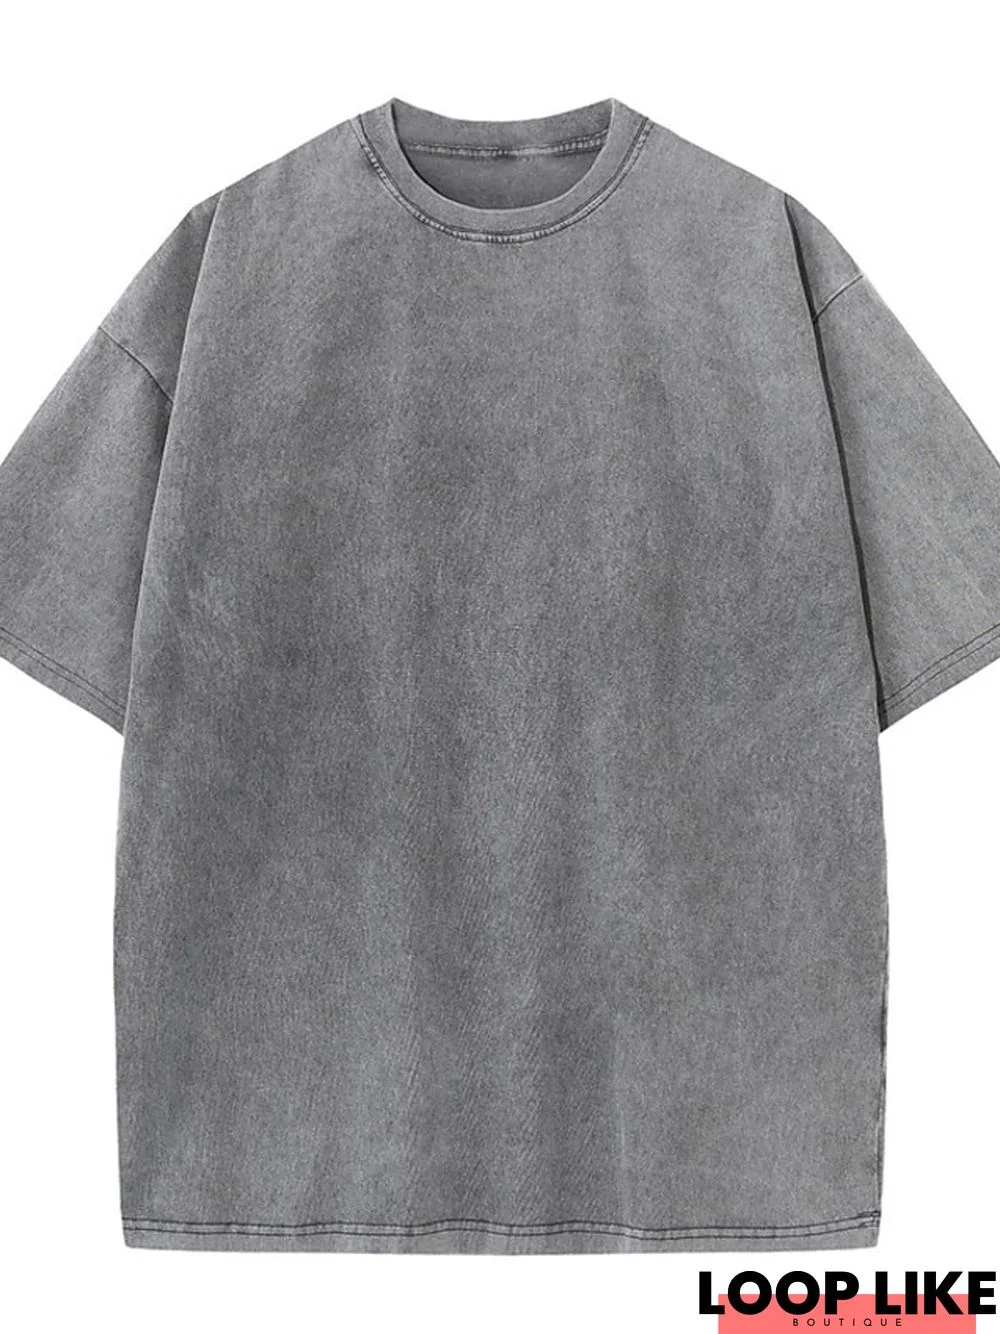 Men's T shirt Tee 100% Cotton Acid Wash Shirt Oversized Shirt Tee Top Plain Crew Neck Outdoor Sport Short Sleeve Clothing Apparel Streetwear Designer Casual Daily